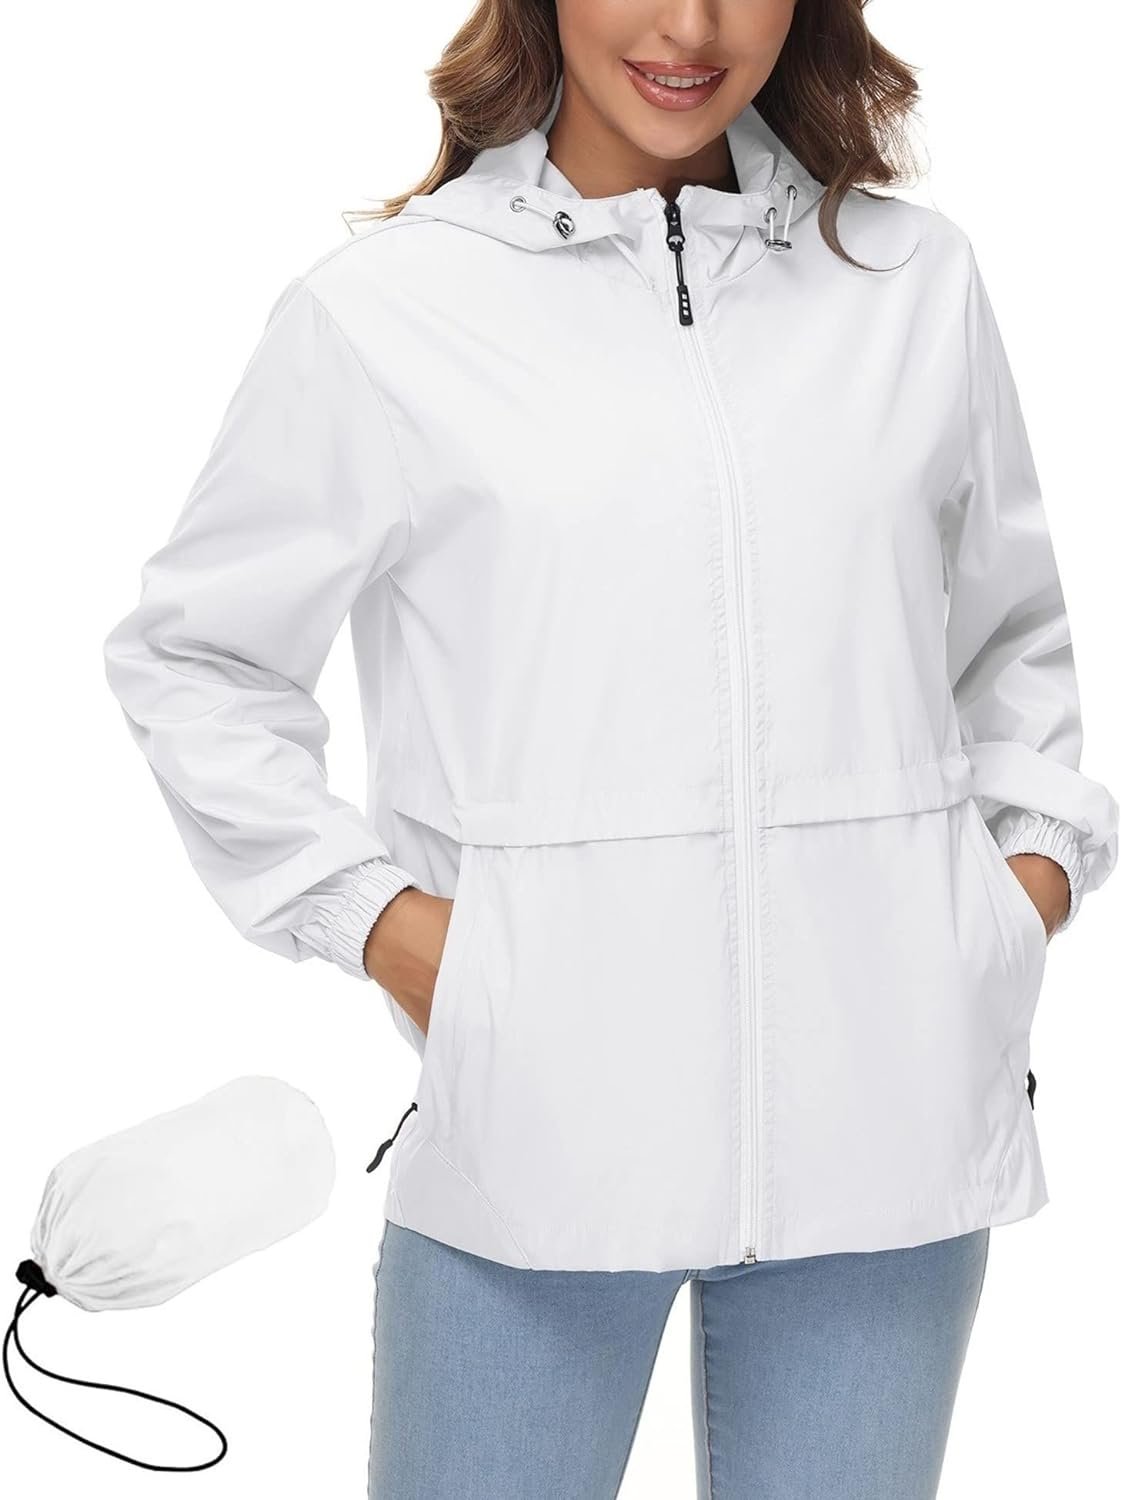 Avoogue Womens Waterproof Rain Jacket Lightweight Raincoat Packable Hooded Outdoor Windbreaker